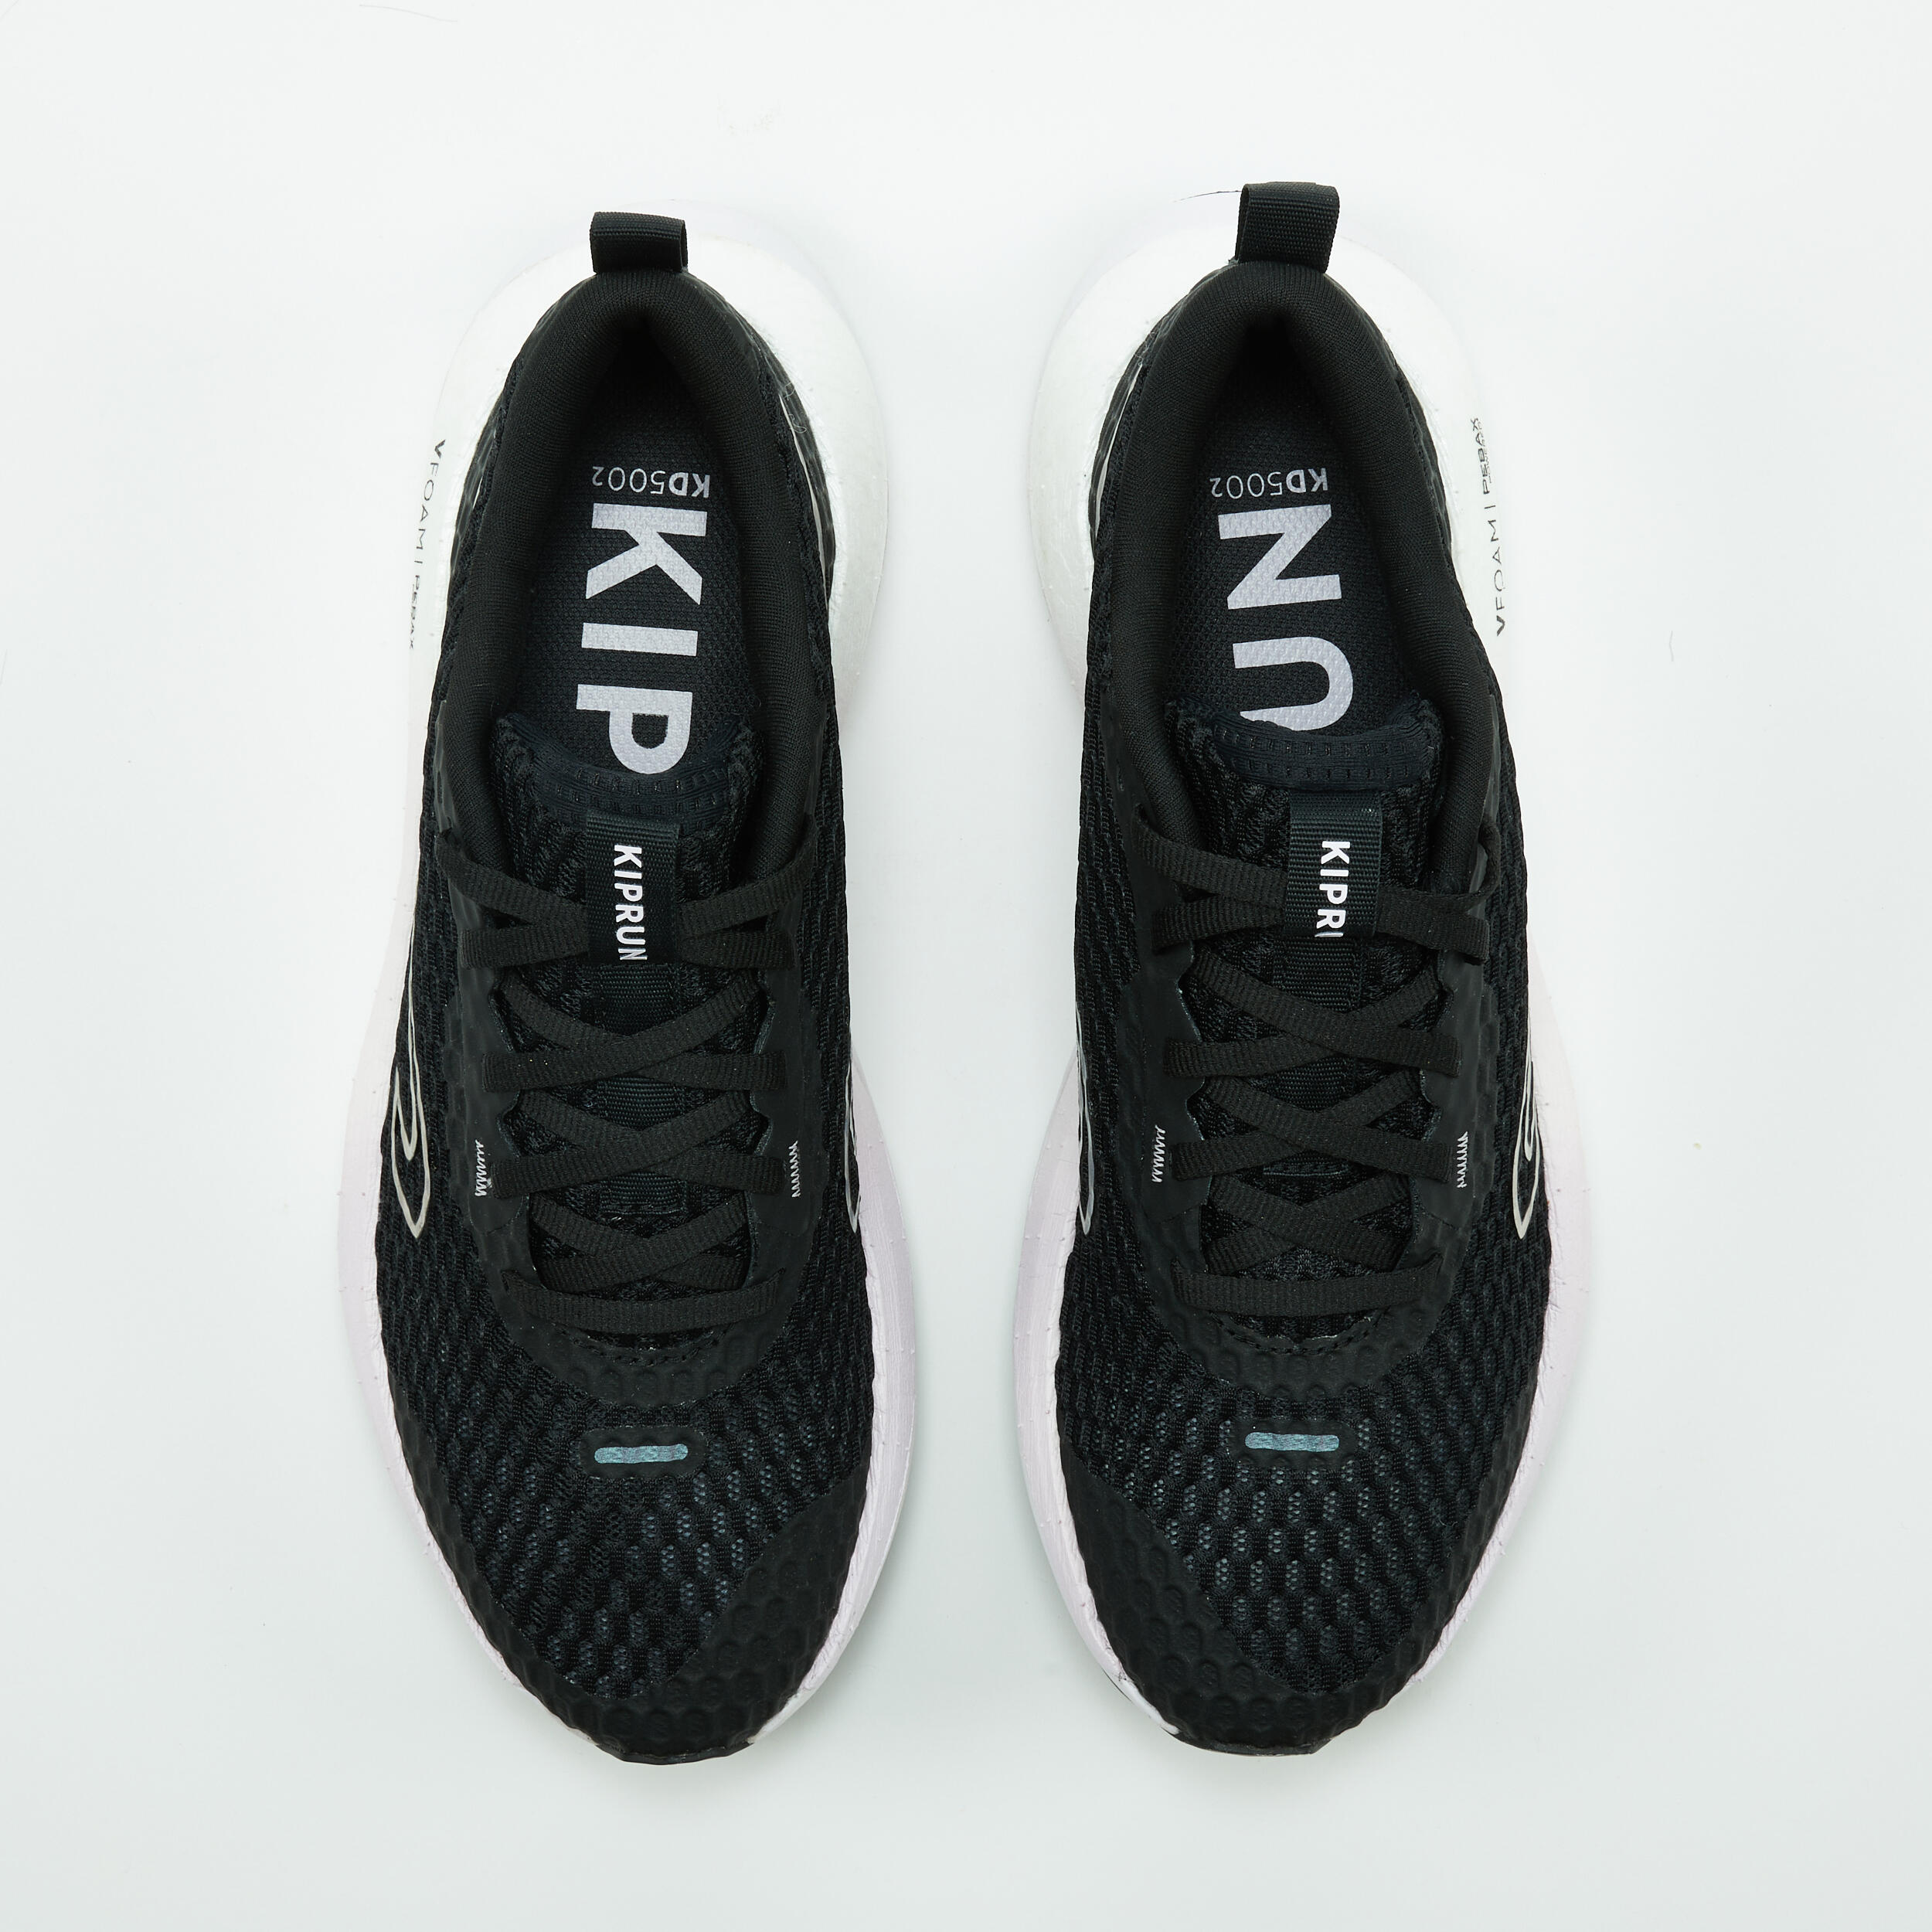 KIPRUN KD500 2 women's running shoes - black/mauve 7/8